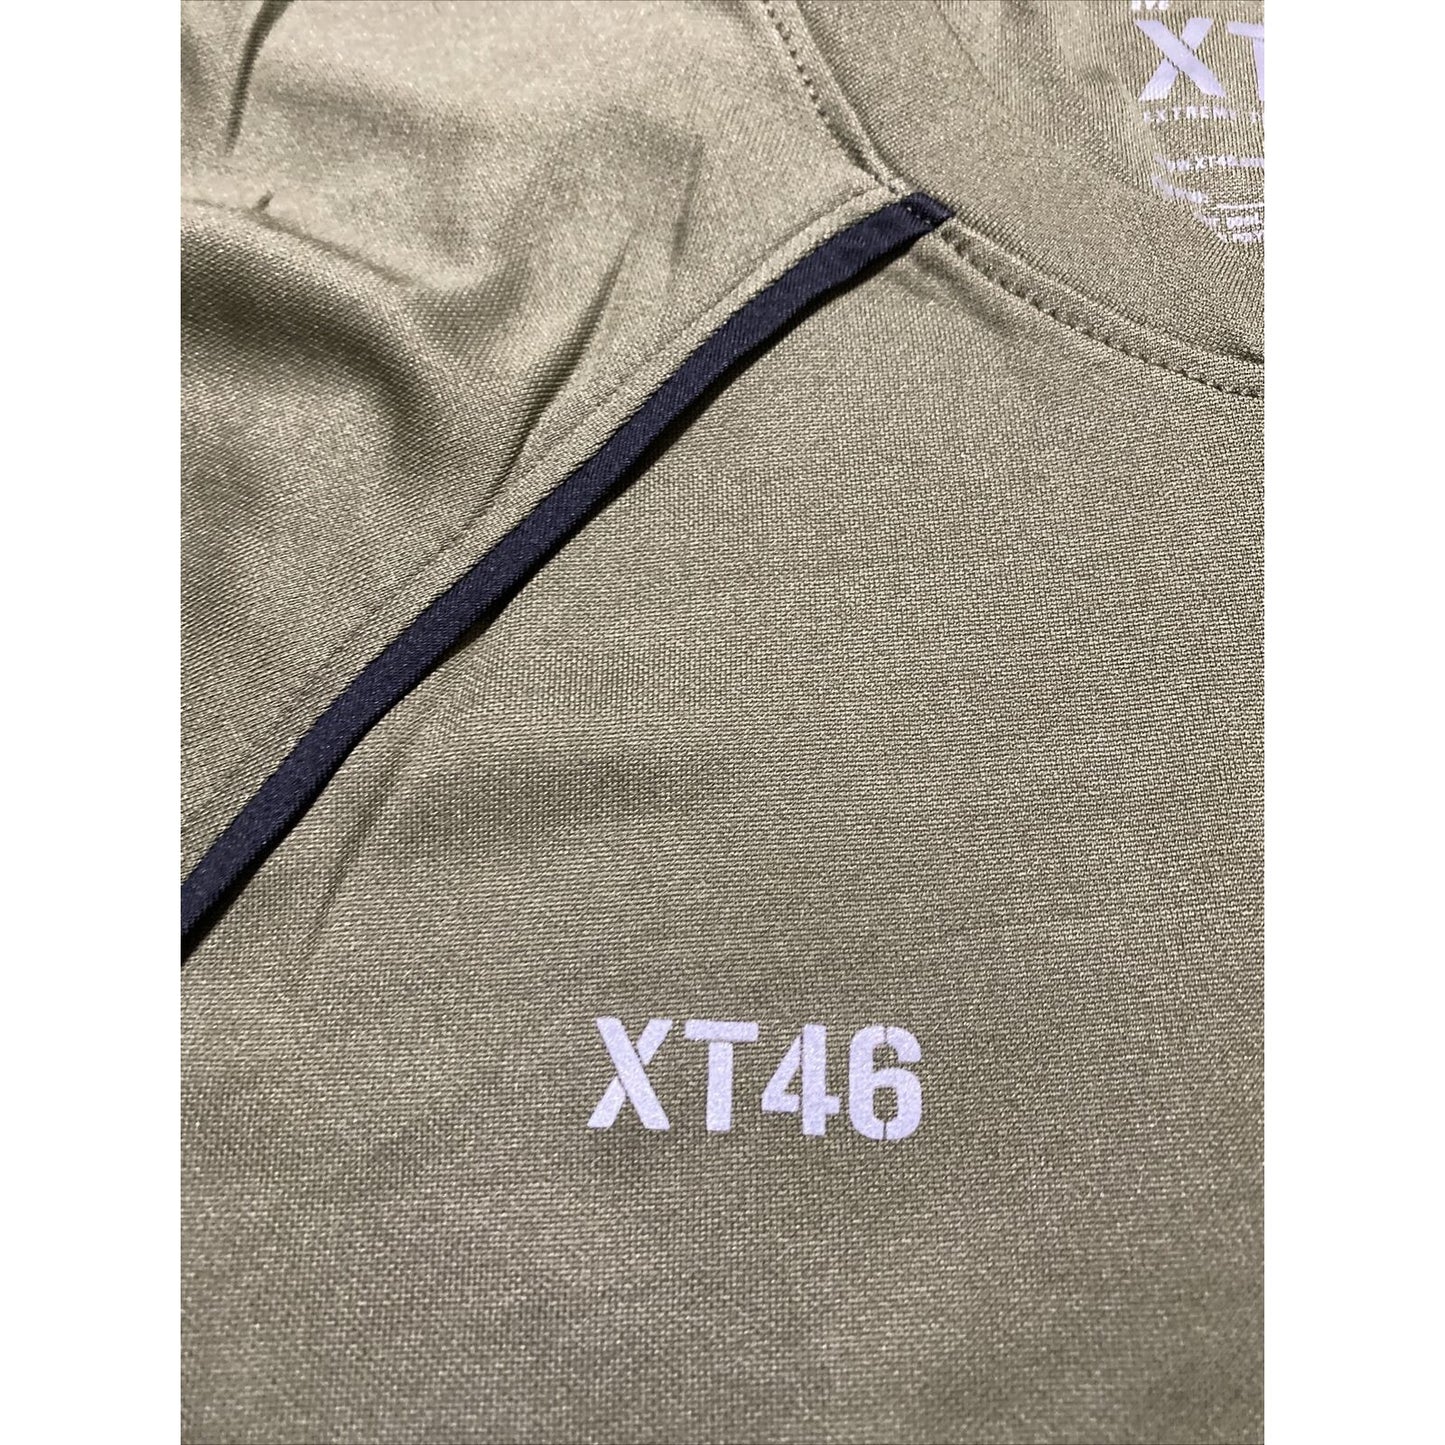 Soffe Extreme Training XT46 Men’s Medium Army Green Polyester Military Shirt NWT